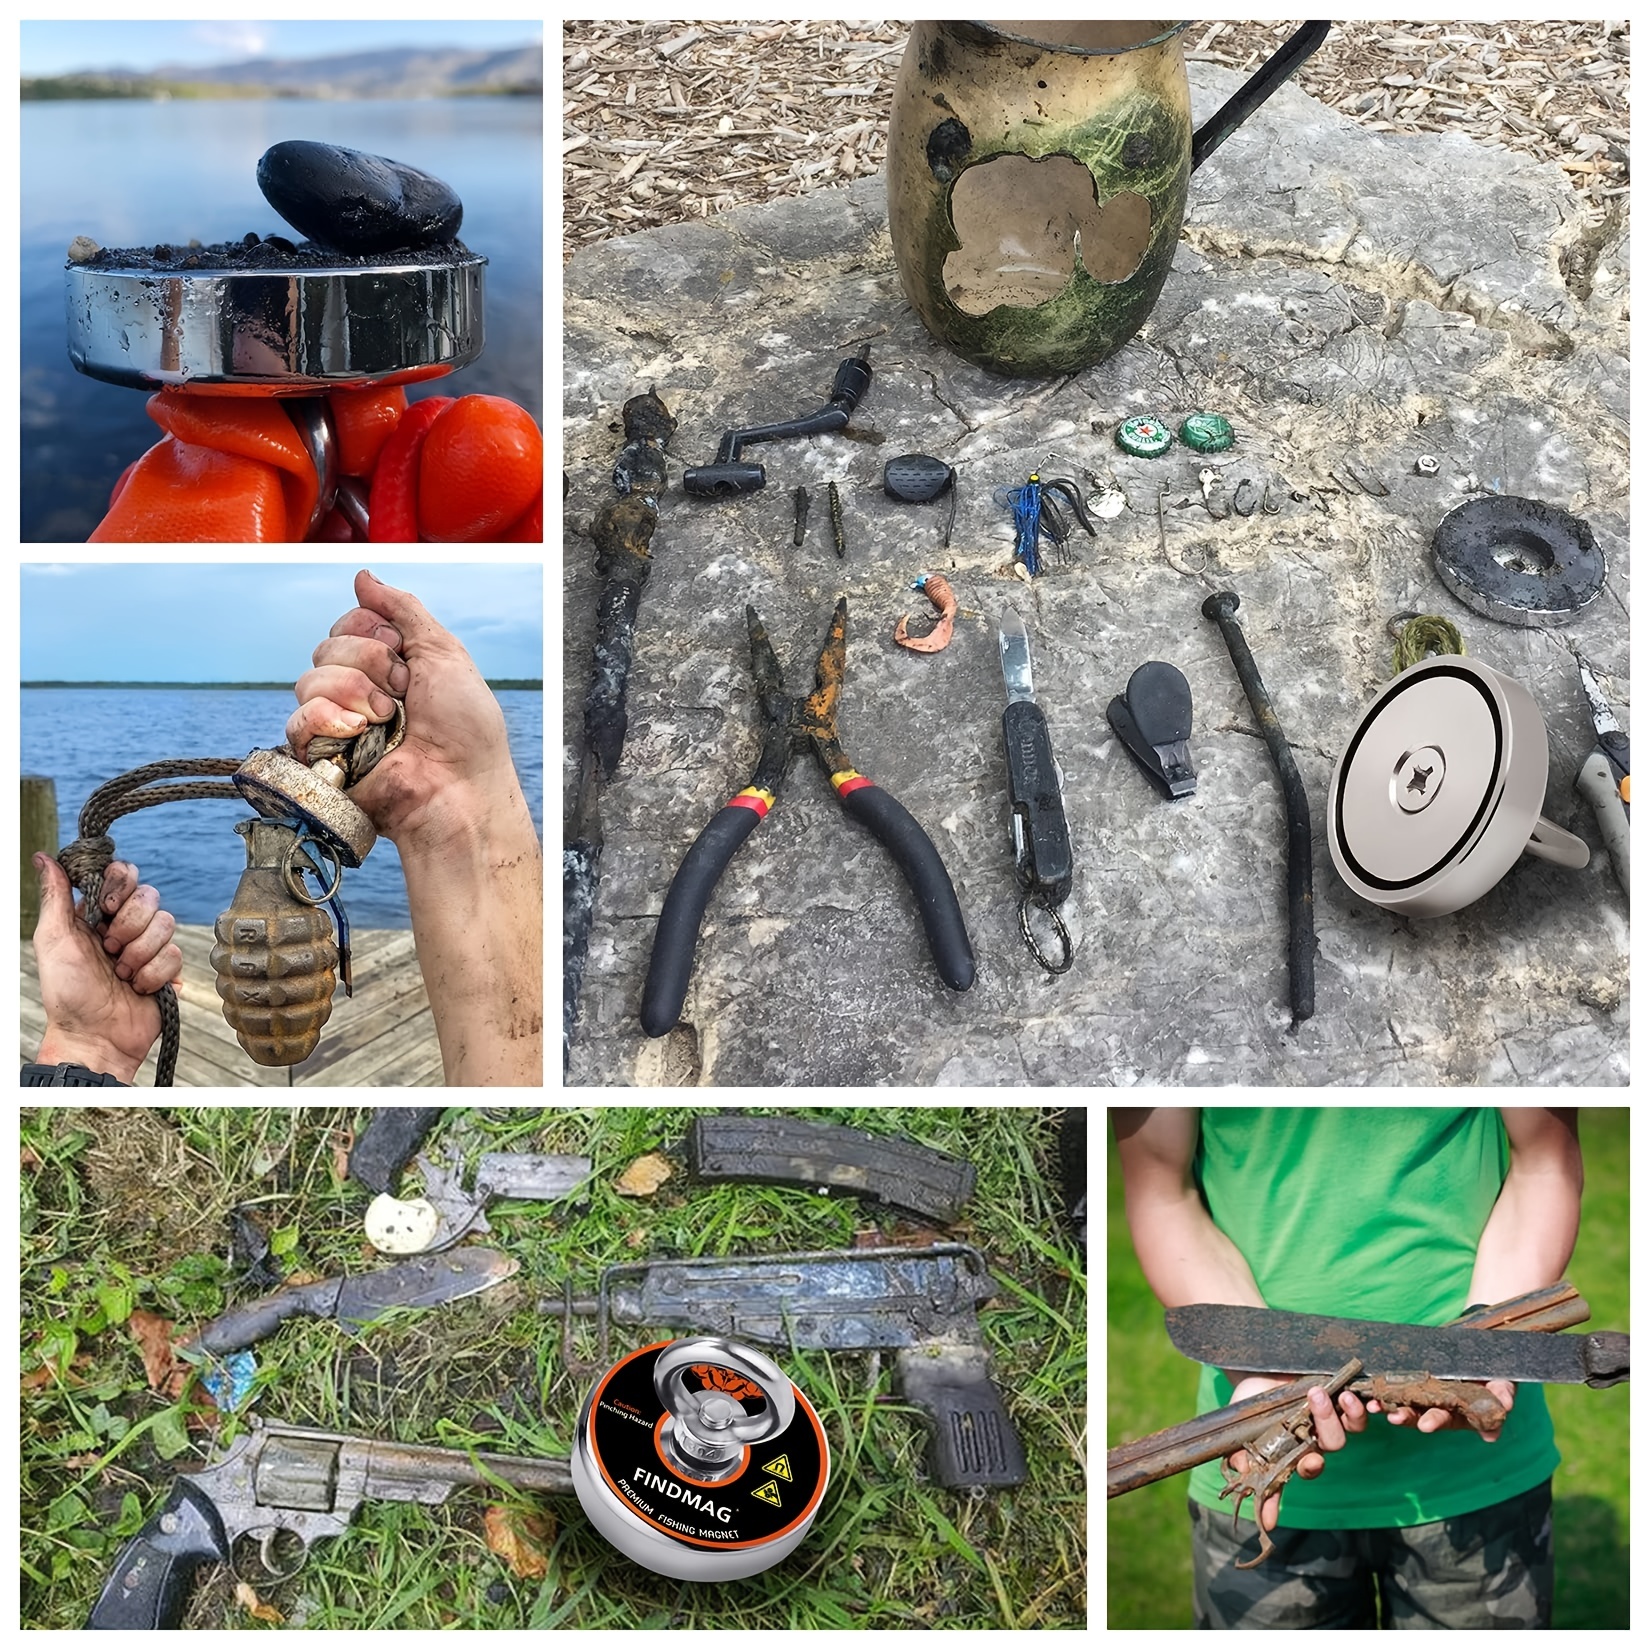 Magnet Fishing, Fishing Magnets Kit, 1000 Lbs (453 Kg) Pulling Force Super  Strong Magnet Fishing Kit